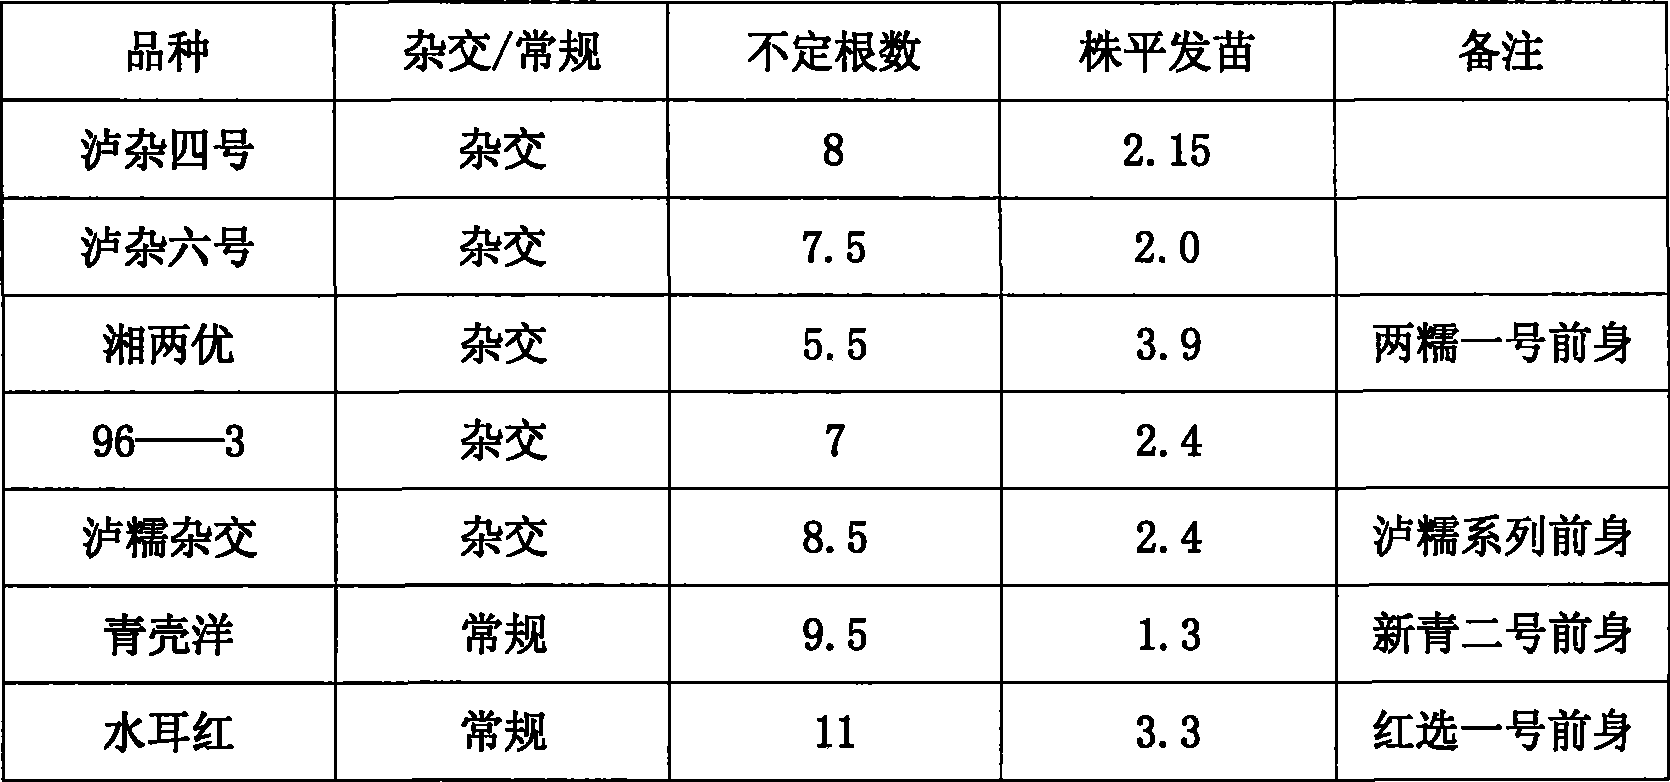 Method for using regeneration capacity of Chinese sorghum